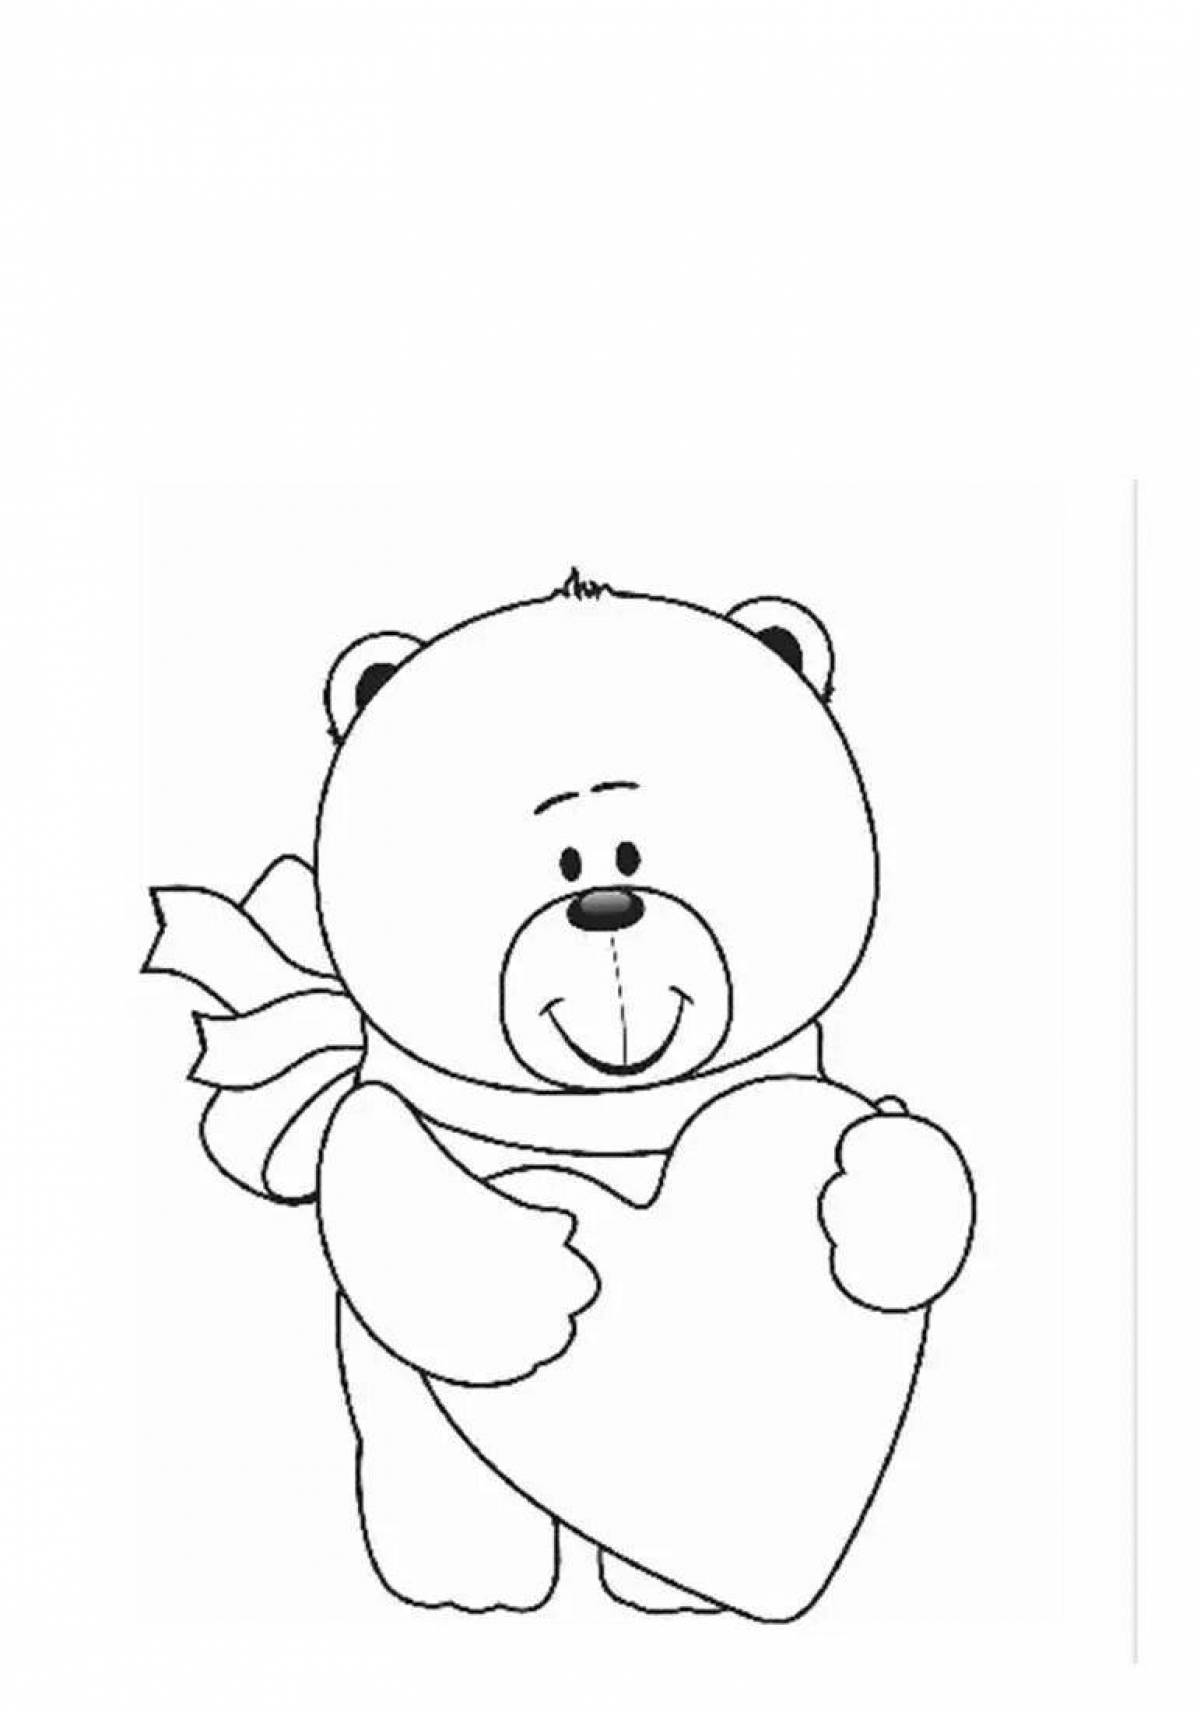 Playful teddy bear with heart pattern